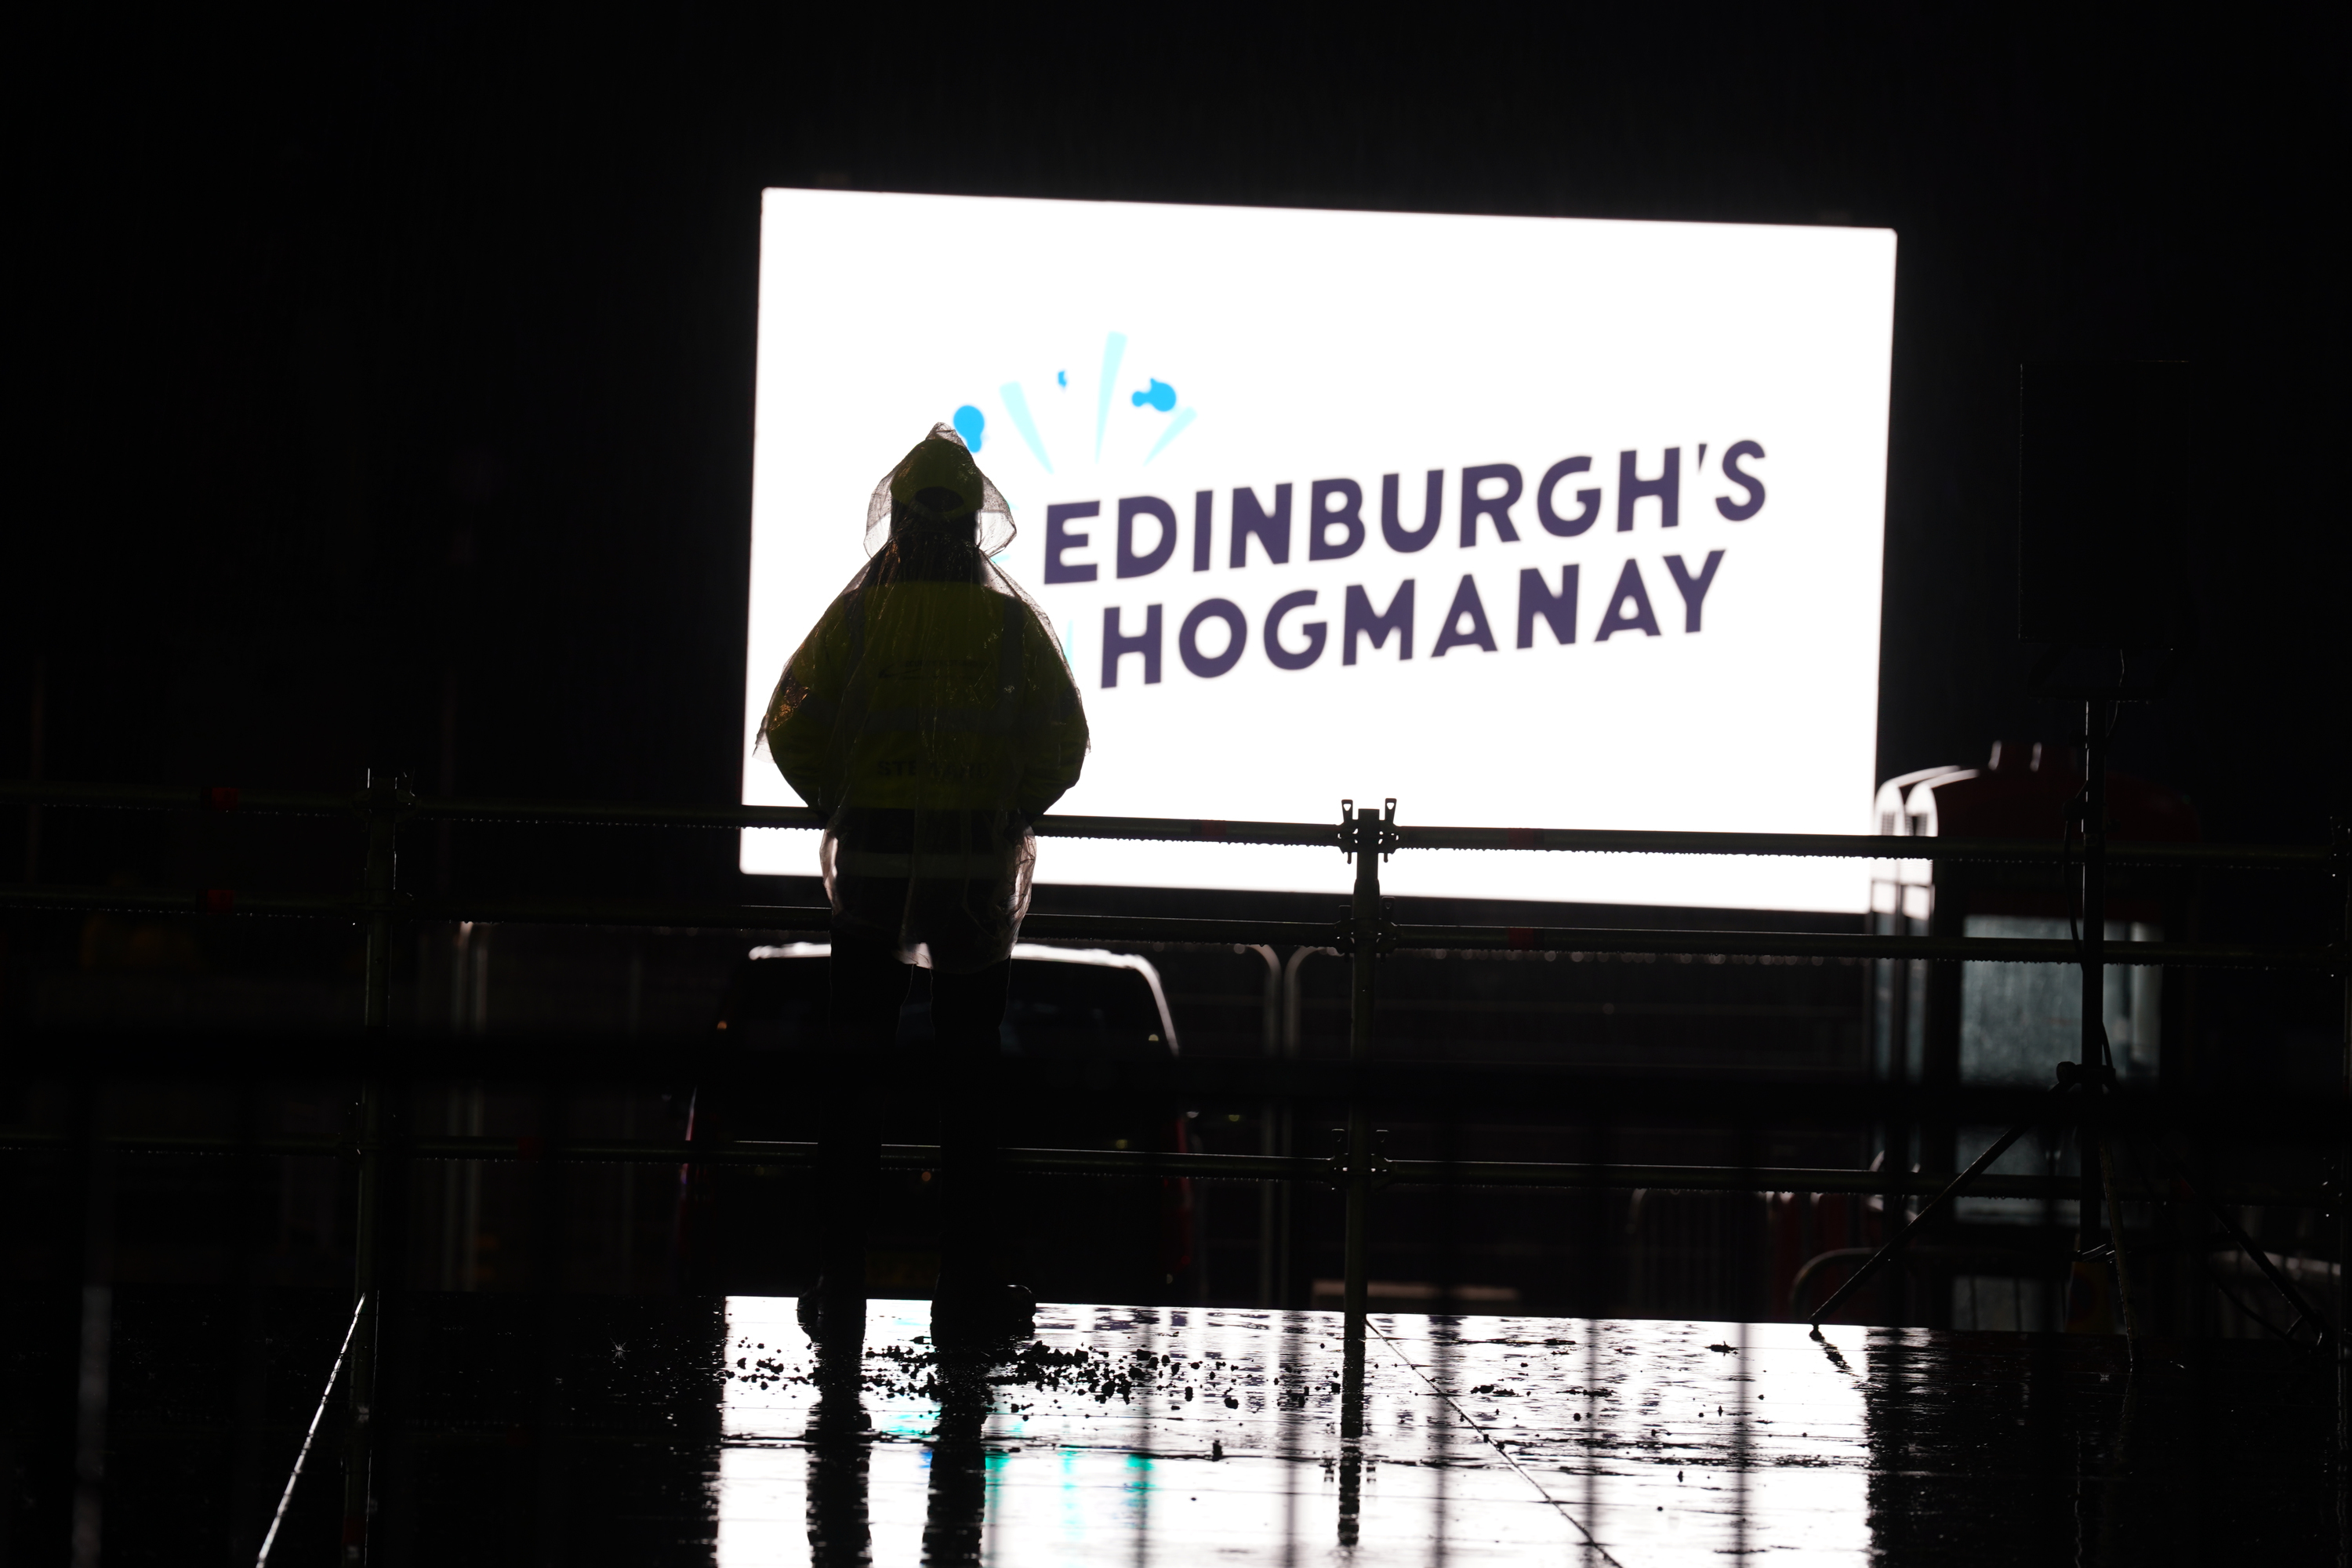 Edinburgh's Hogmanay sign